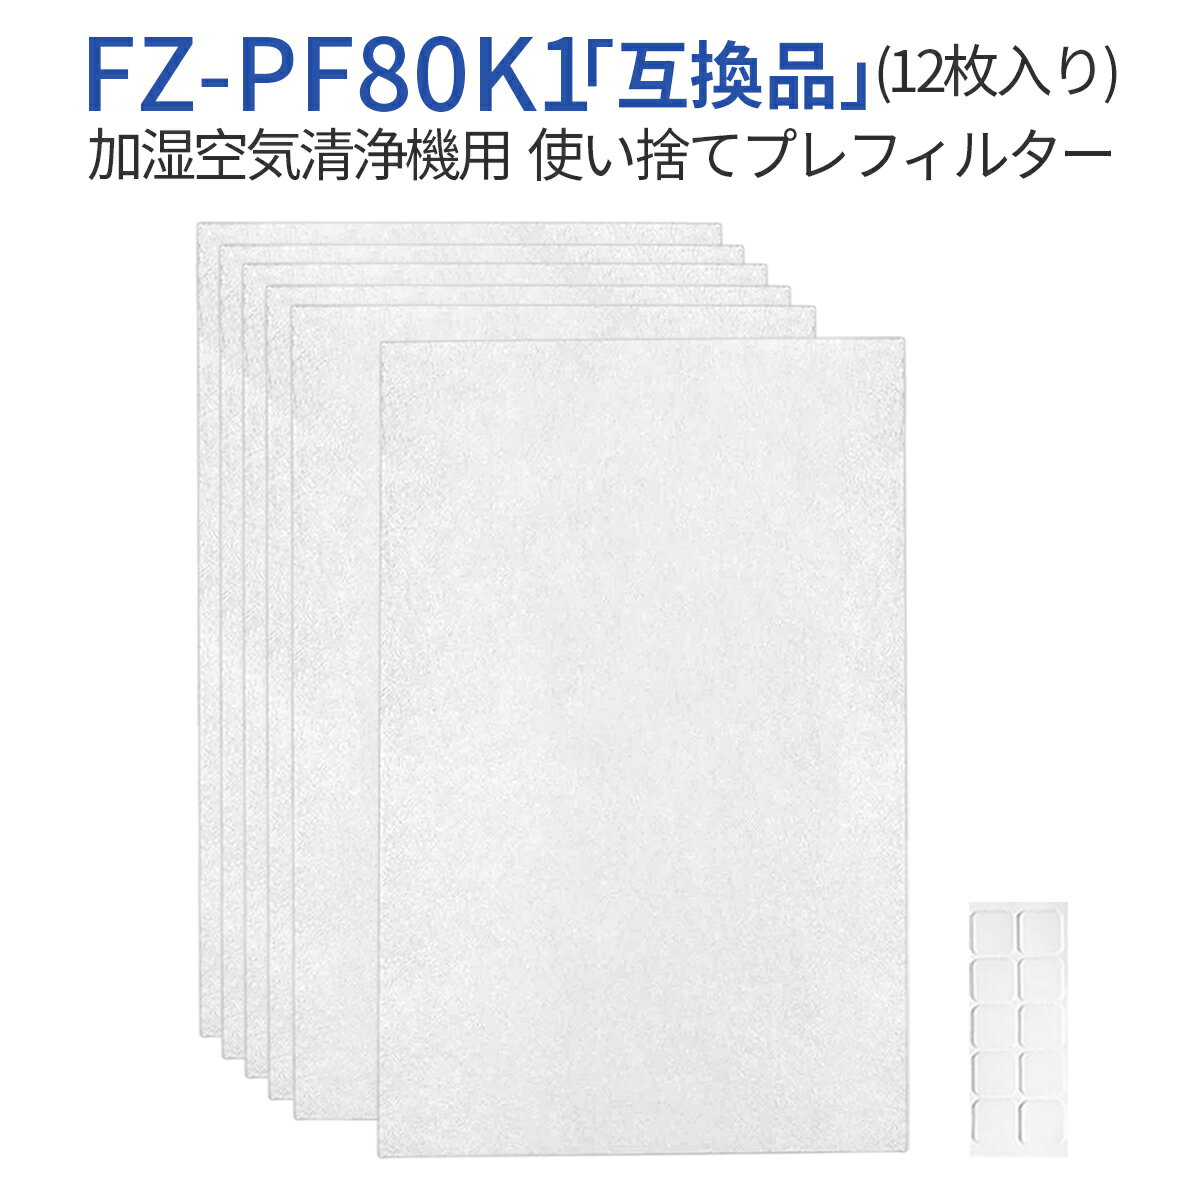 FZ-PF80K1 使い捨てプレフィルター fz-pf80k1 シャープ加湿空気清浄機 フィルター プレフィルター (12枚入り) 純正品ではなく互換品です